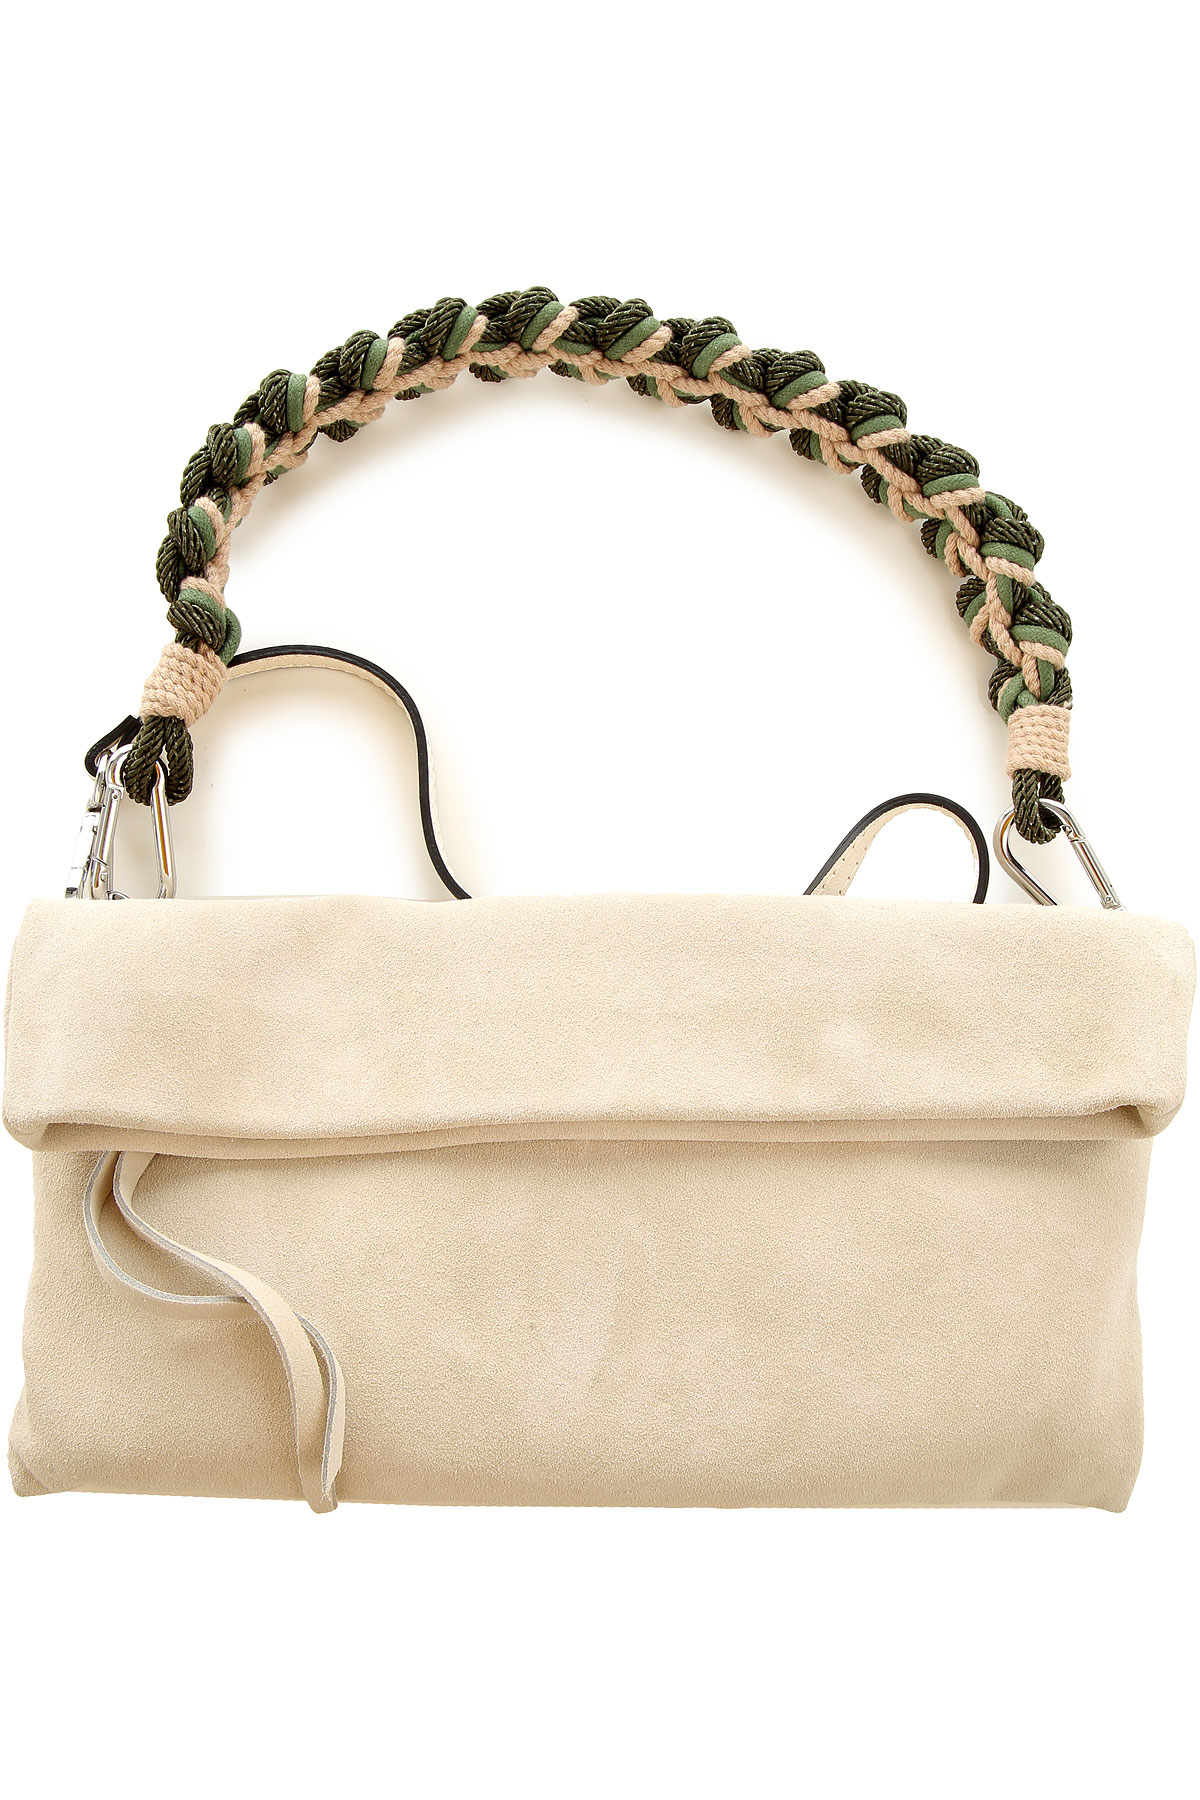 Handbags Gianni Chiarini, Style code: 7375-cm-beige